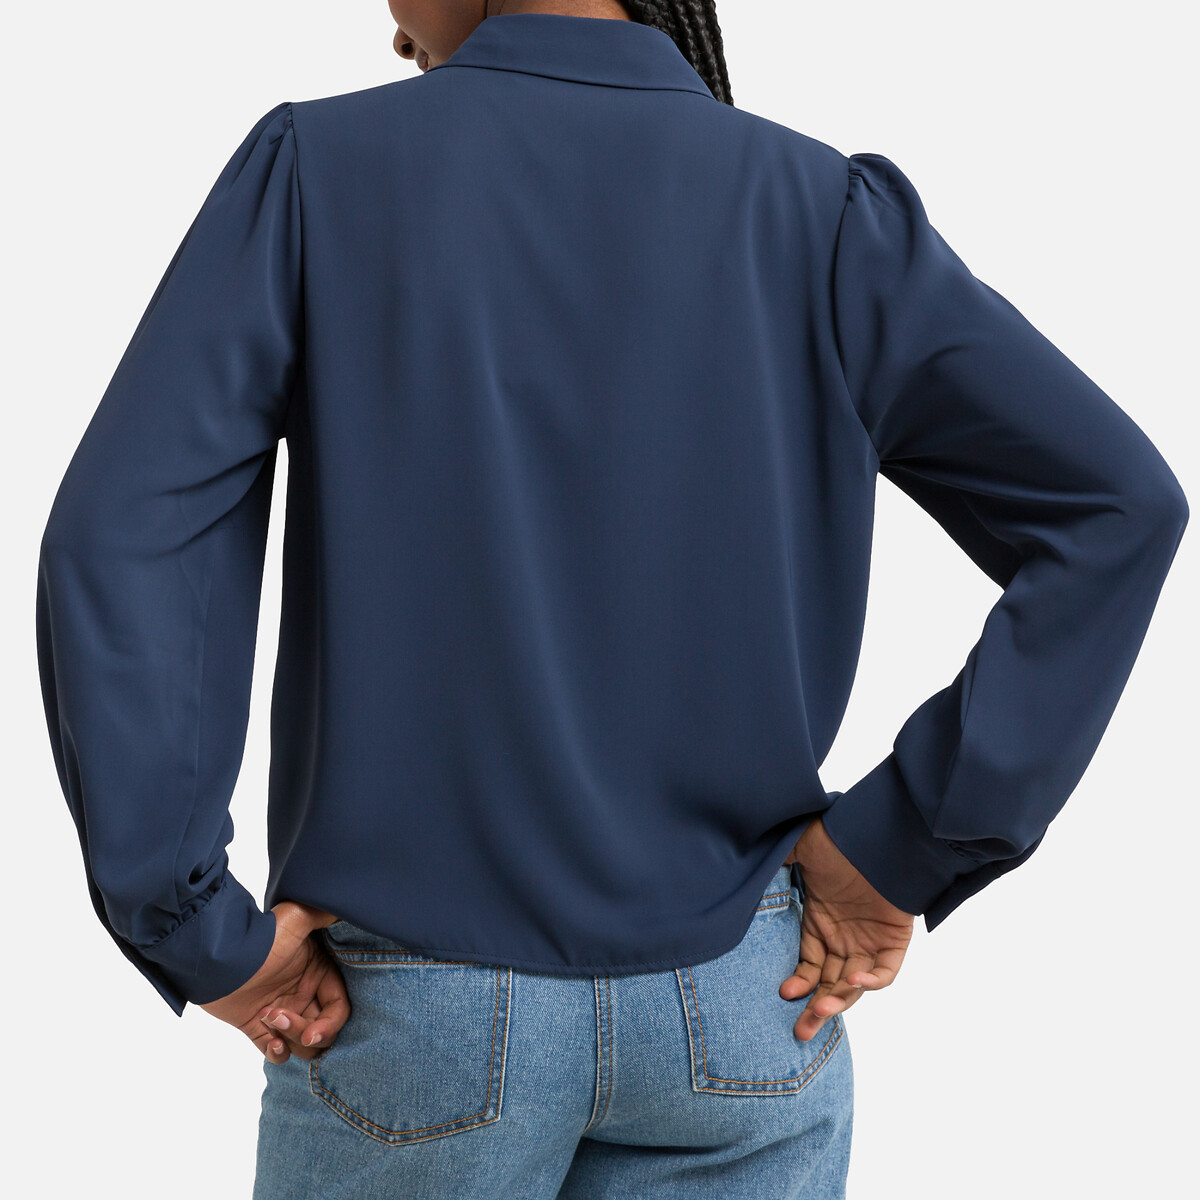 Рубашка Длинные рукава вставка из кружева S синий LaRedoute, размер S - фото 4